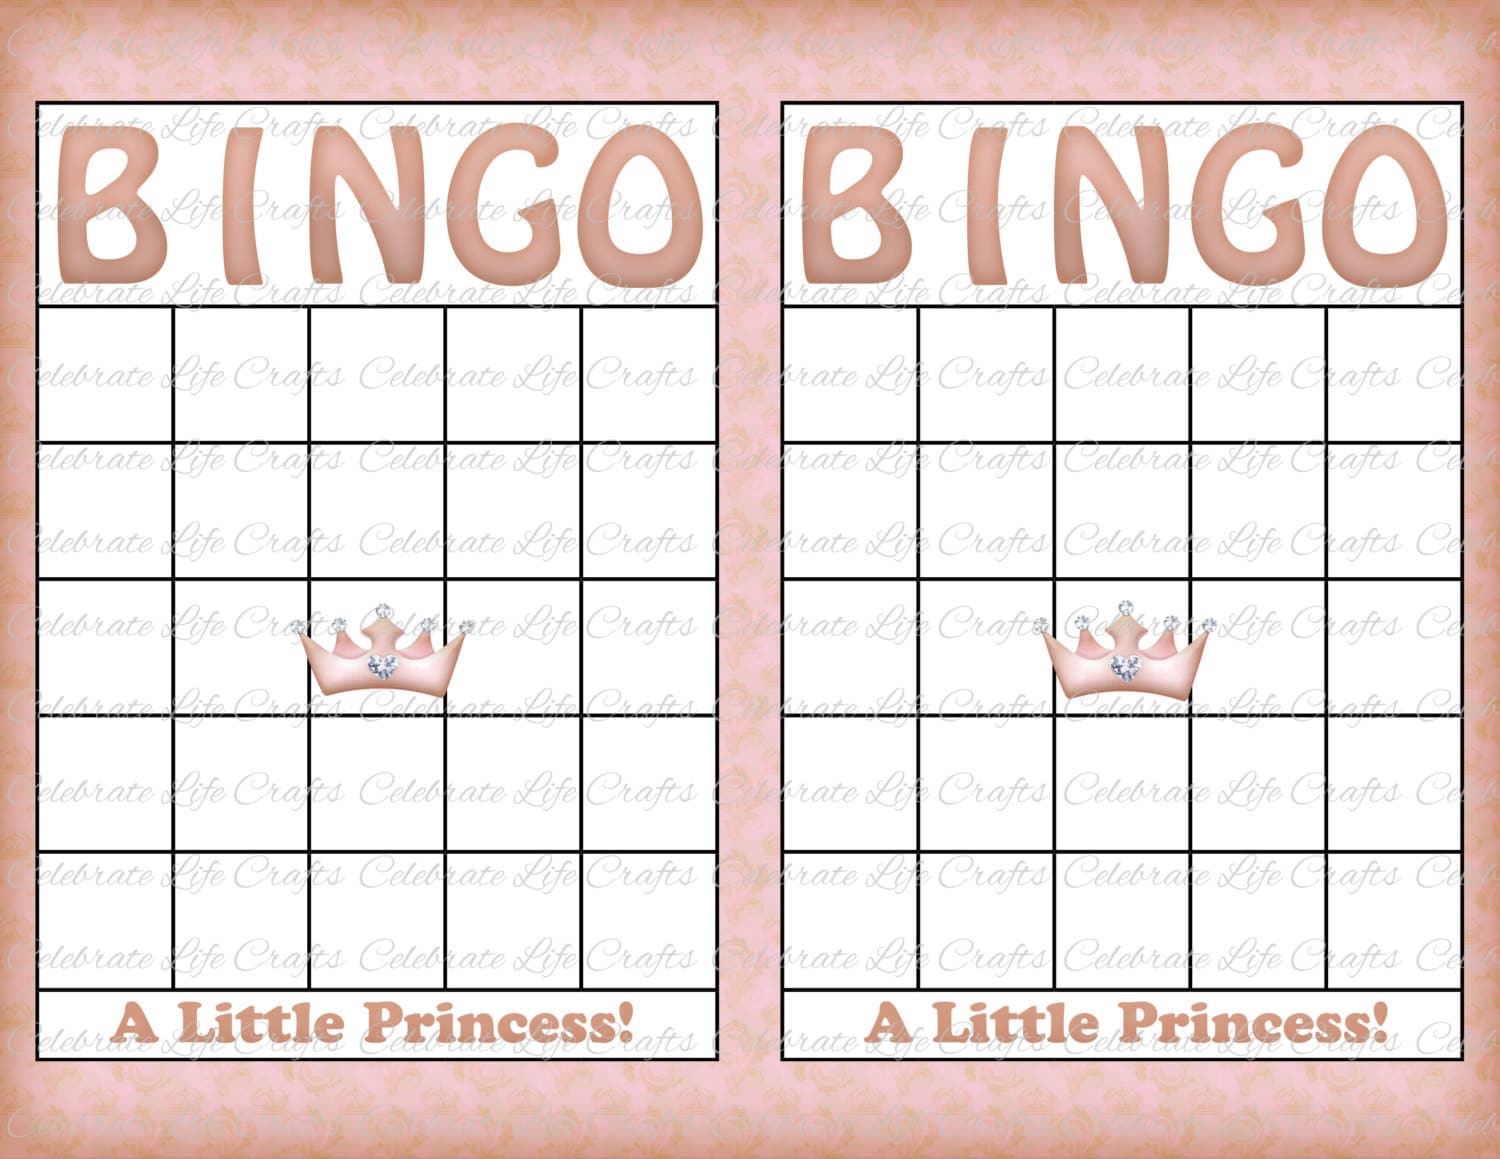 50 Free Printable Baby Bingo Cards The baby shower bingo word lists